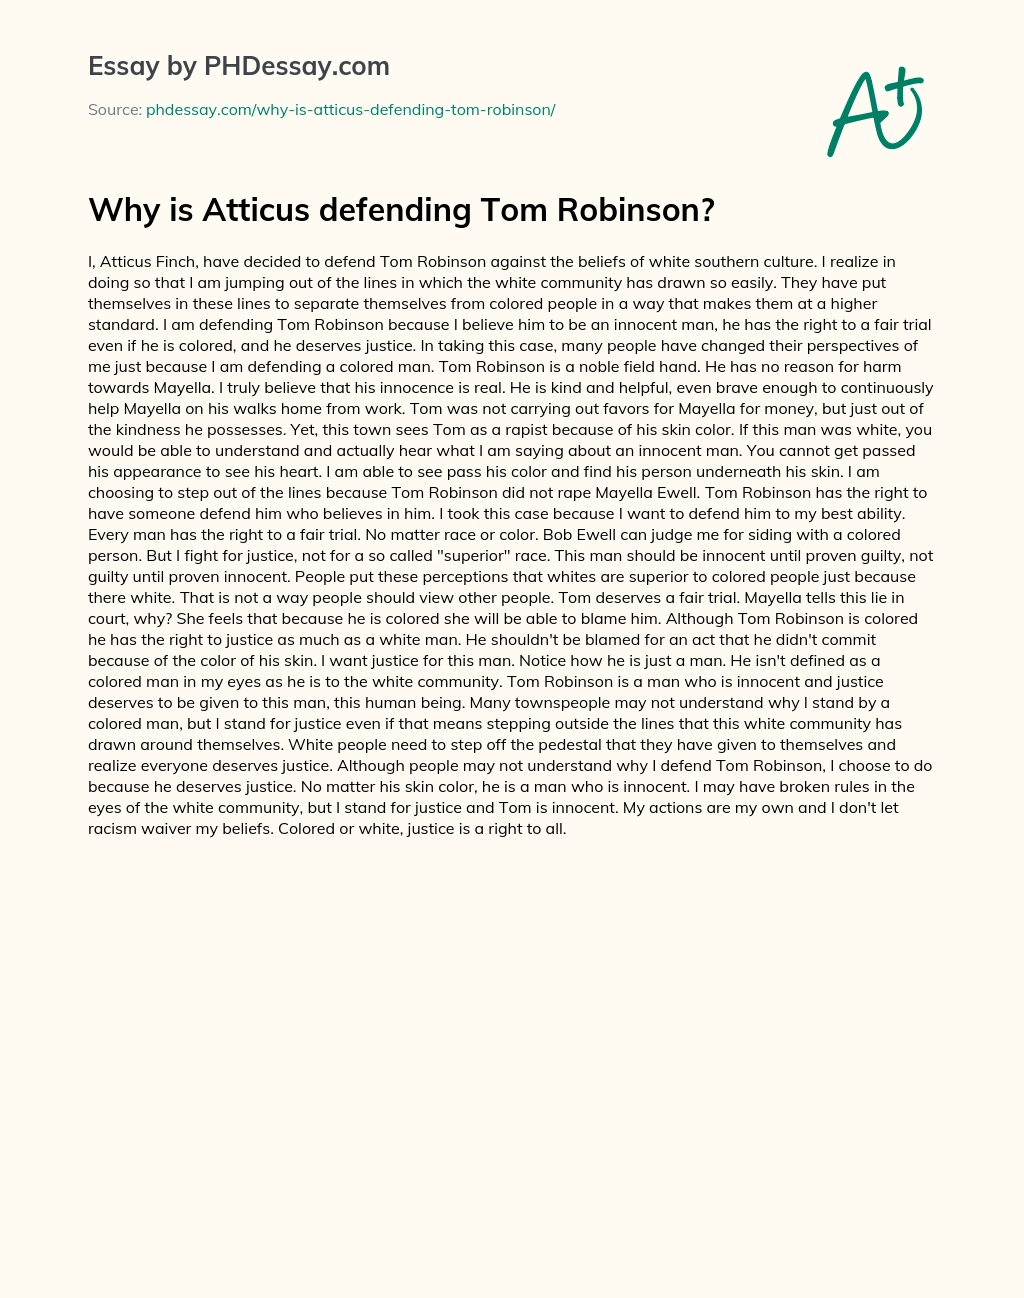 Why is Atticus defending Tom Robinson? essay